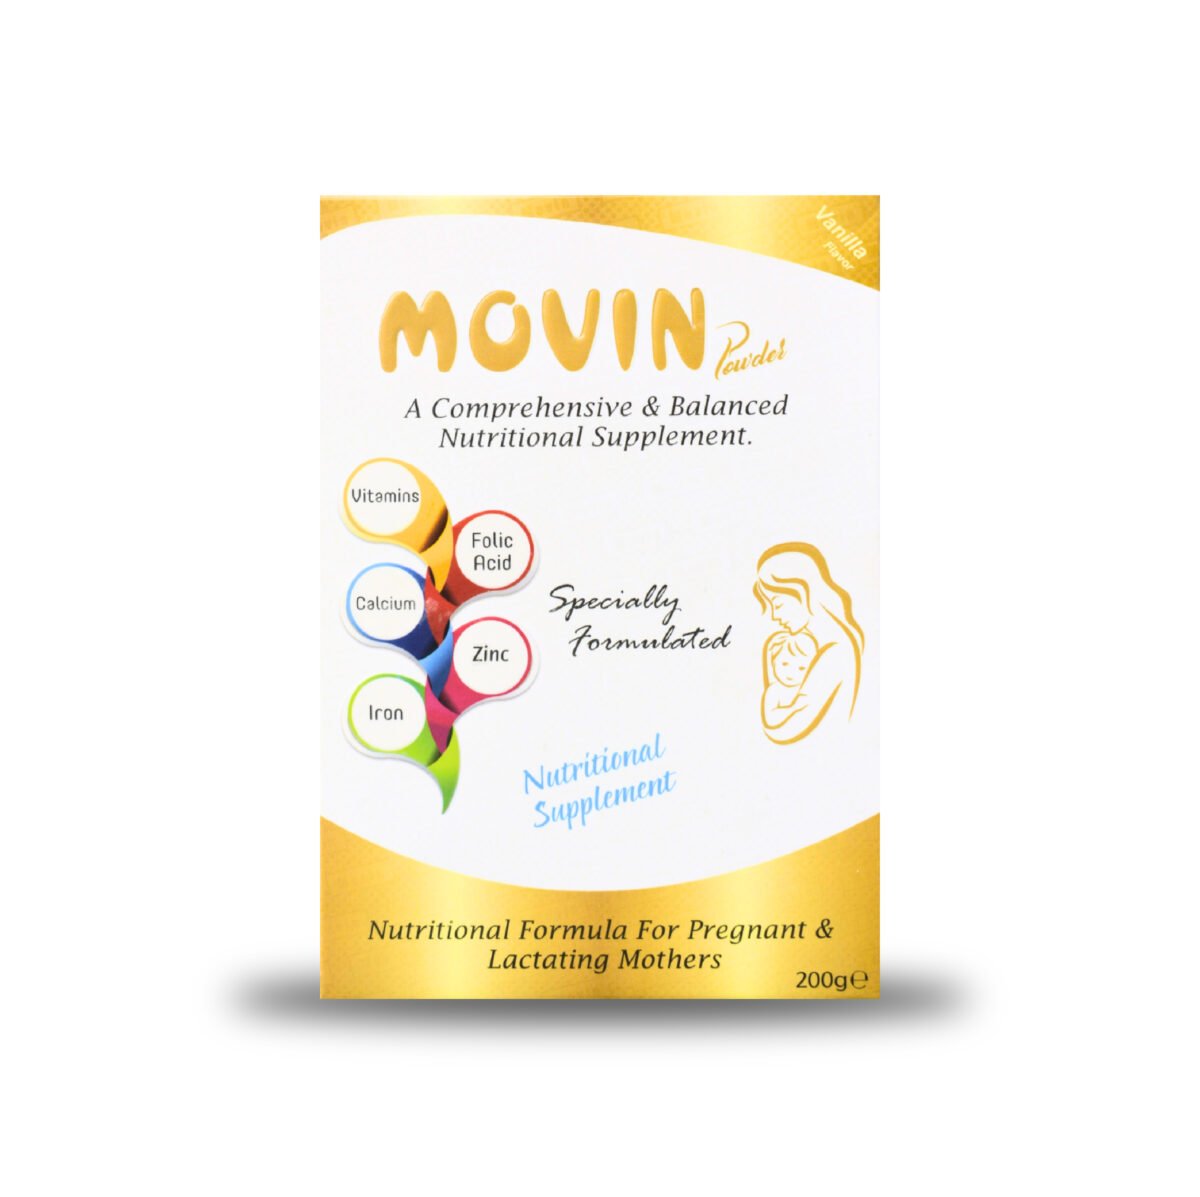 ovin-nutritional-formula-for-pregnant-lactating-mothers